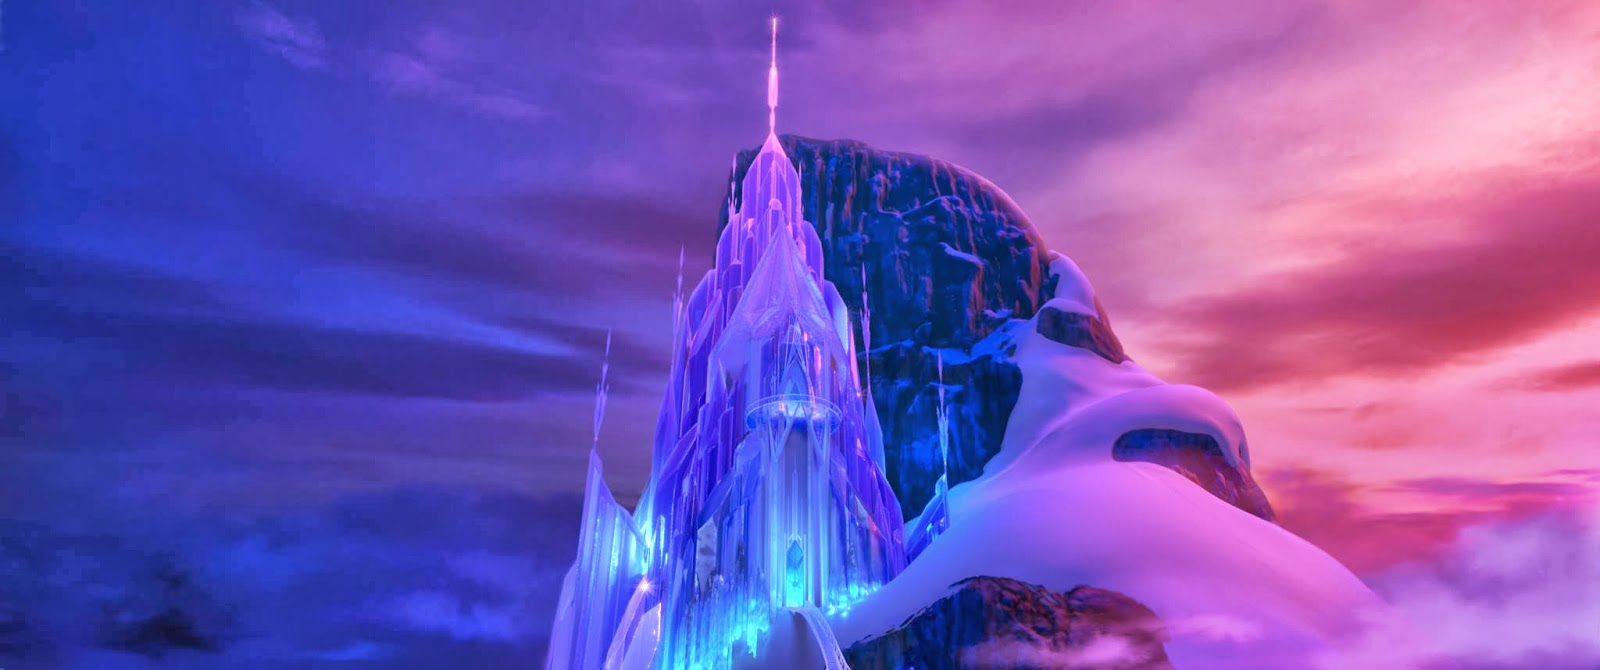 Frozen Disney animatedfilmreviews.filminspector.com